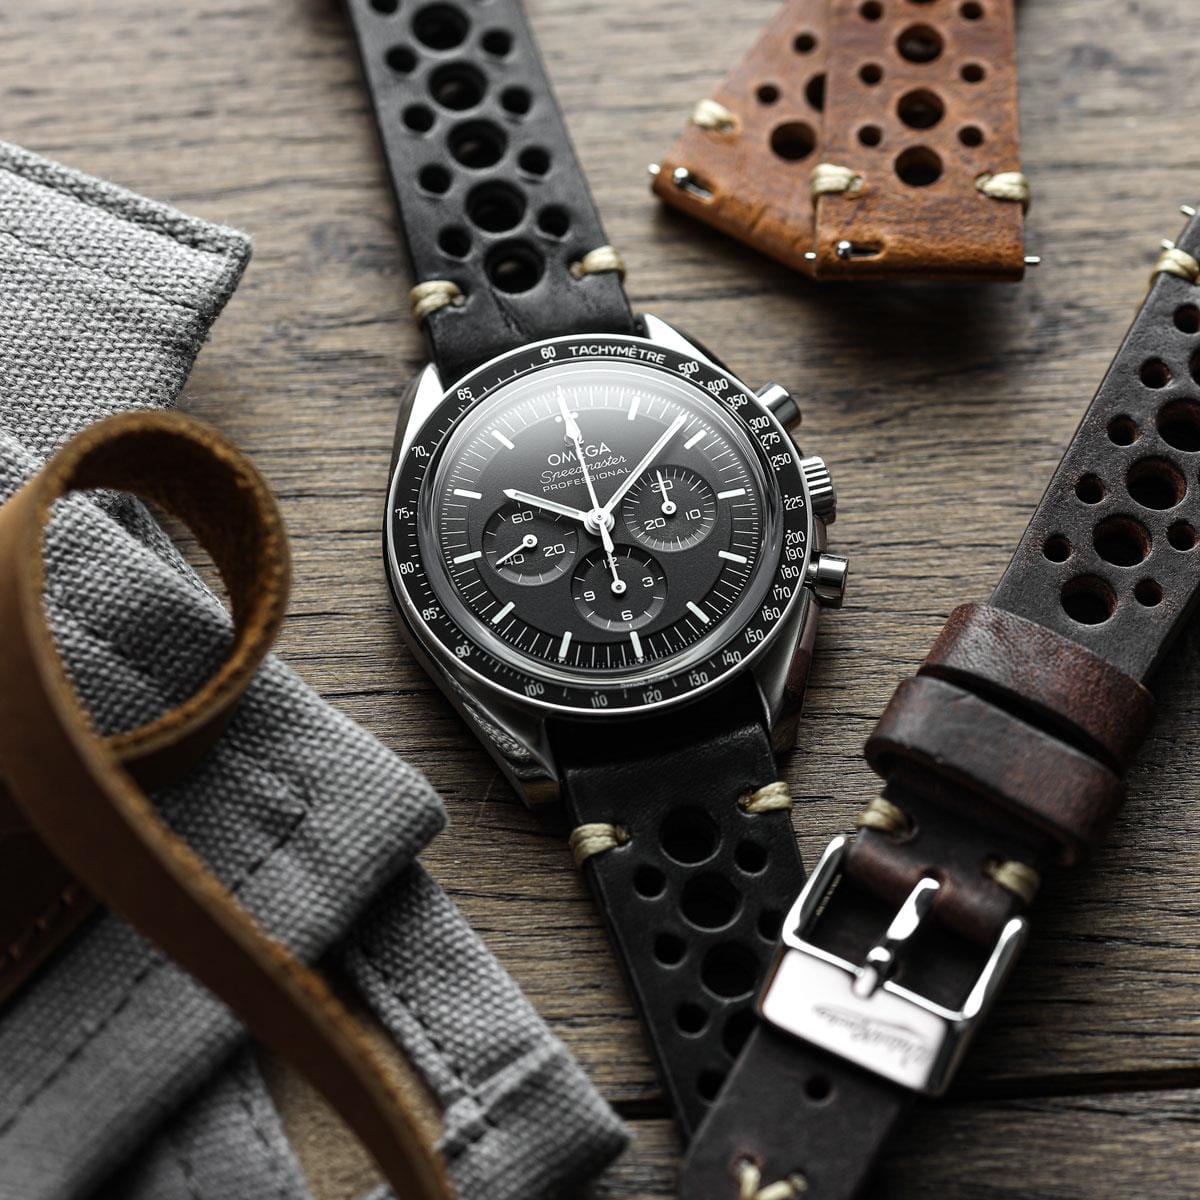 WatchGecko V-Stitch Italian Leather Perforated Watch Strap - Light Brown